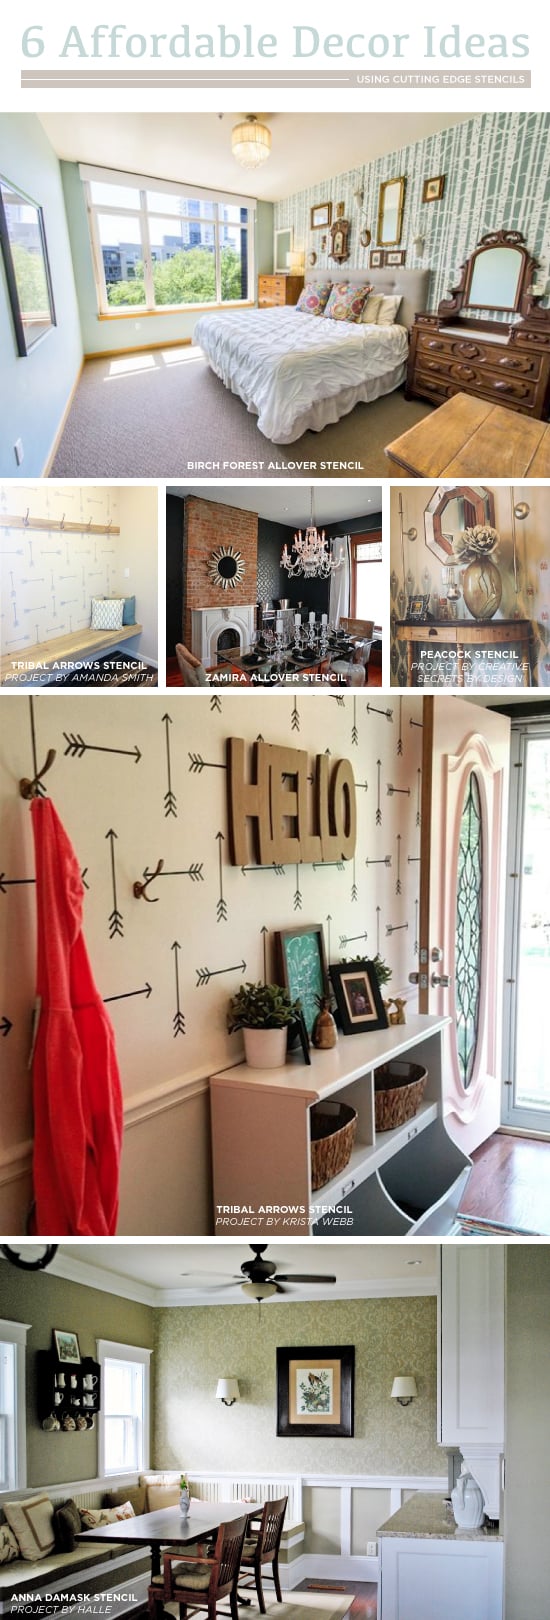 Cutting Edge Stencils shares DIY home decor and room ideas using wall stencils. http://www.cuttingedgestencils.com/wall-stencils-stencil-designs.html